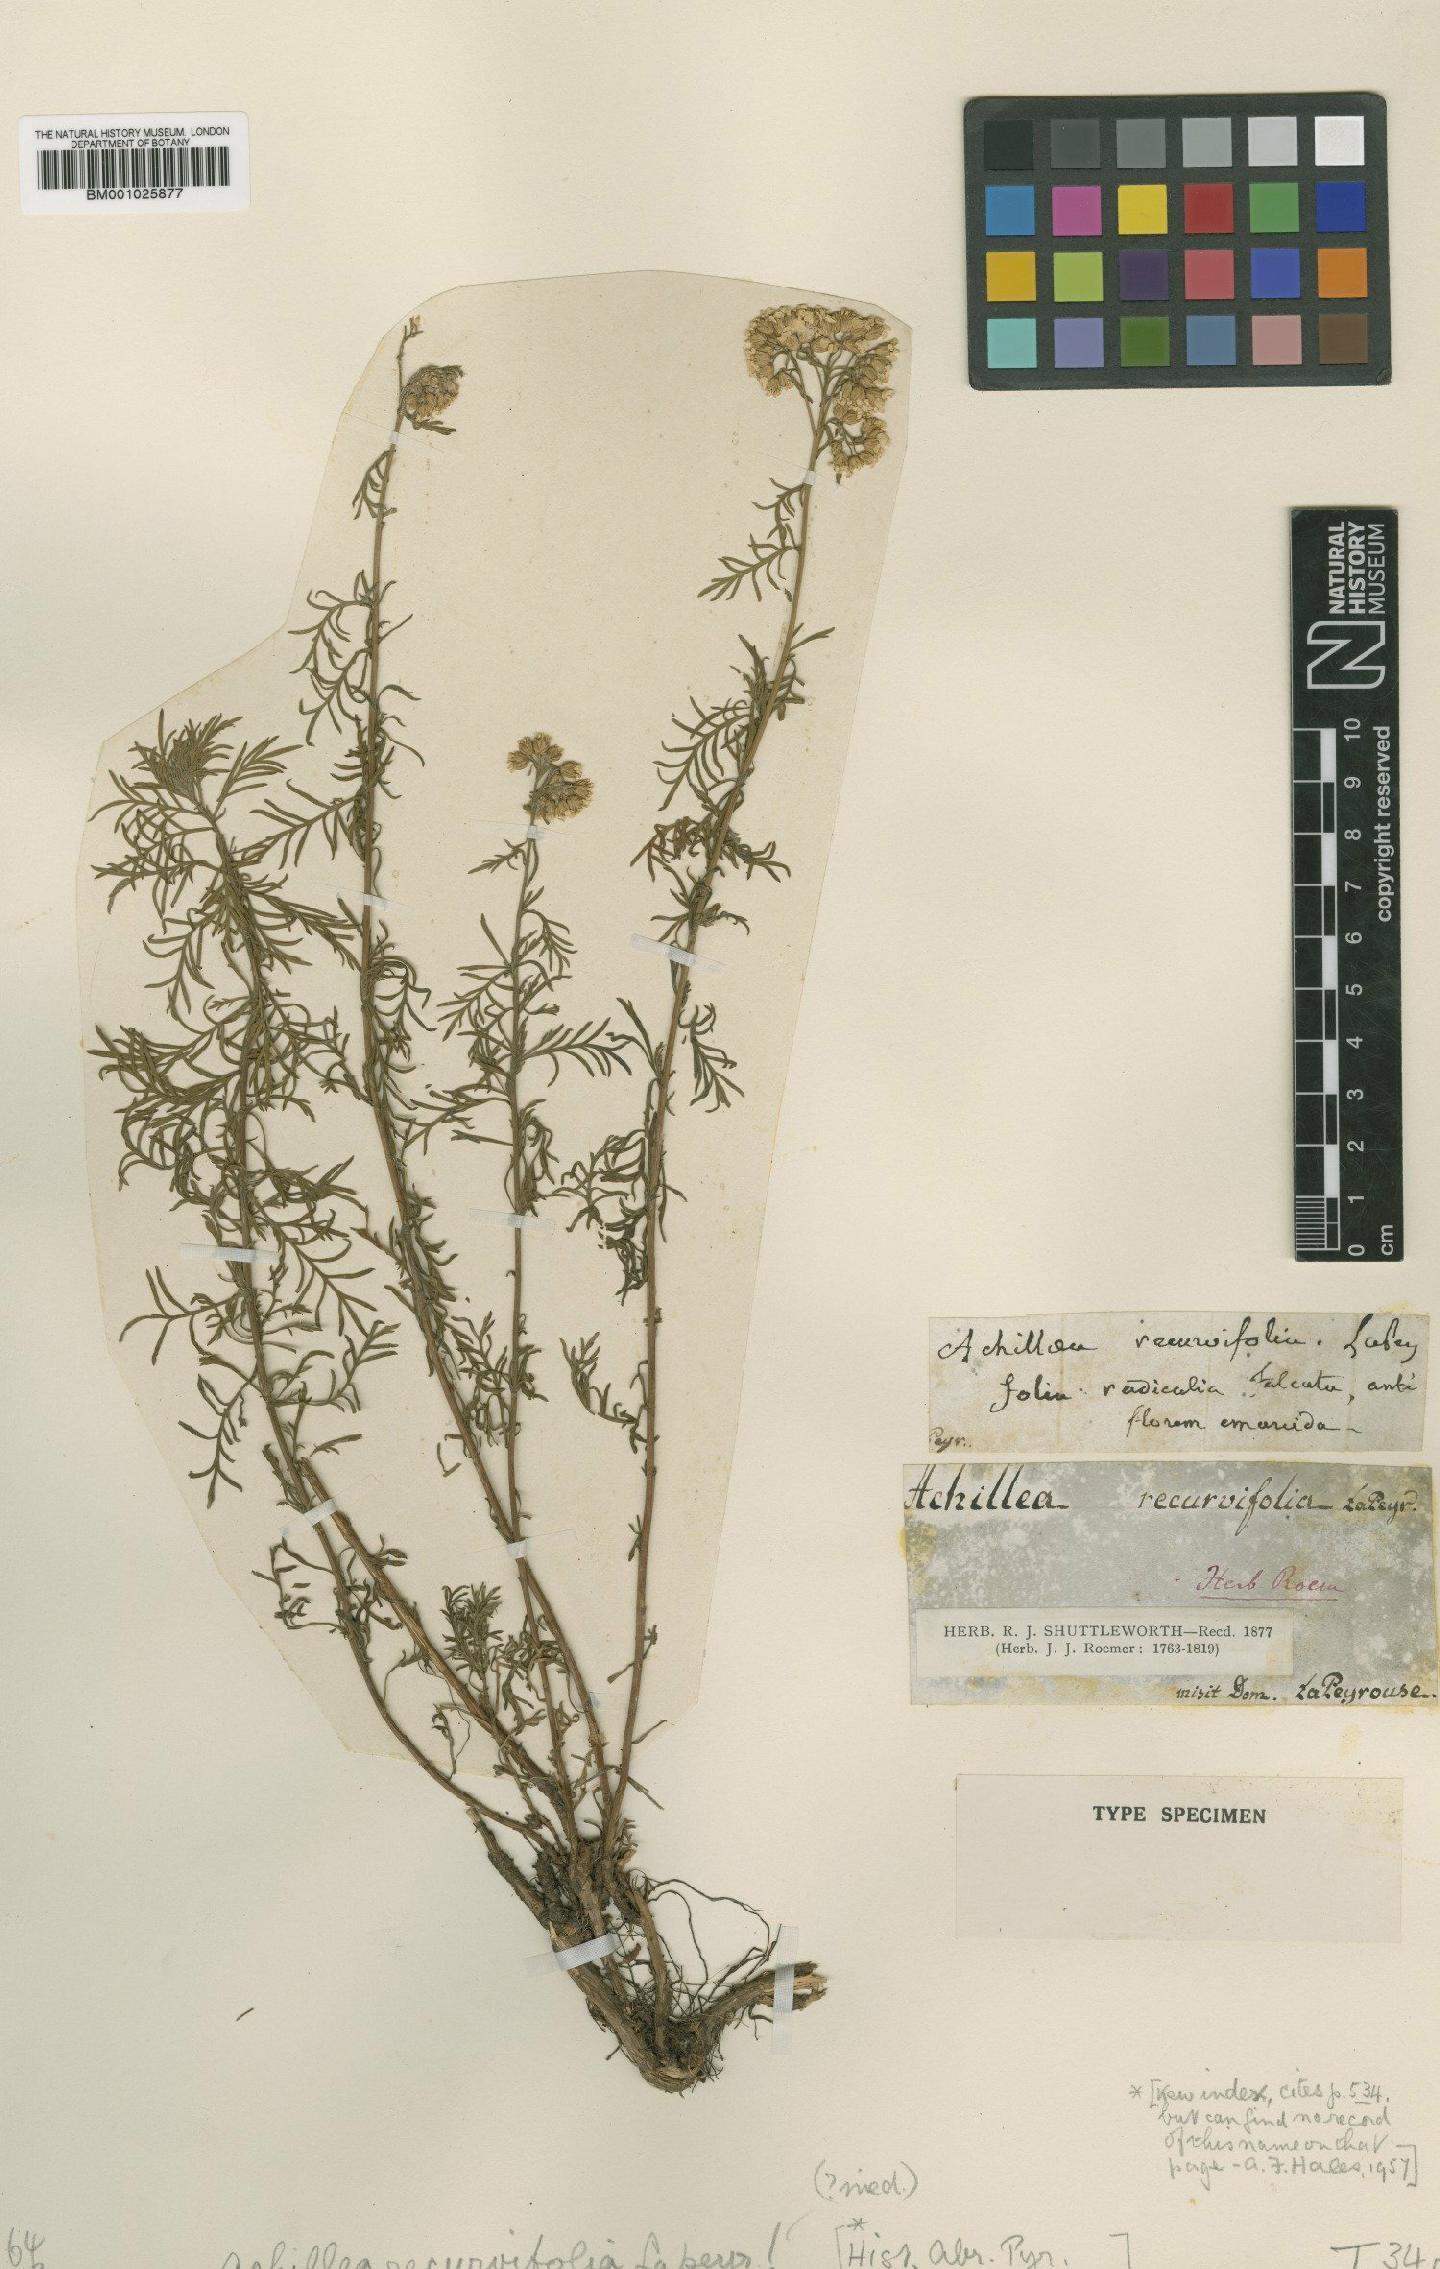 To NHMUK collection (Achillea chamaemelifolia Pourr.; Type; NHMUK:ecatalogue:1905544)